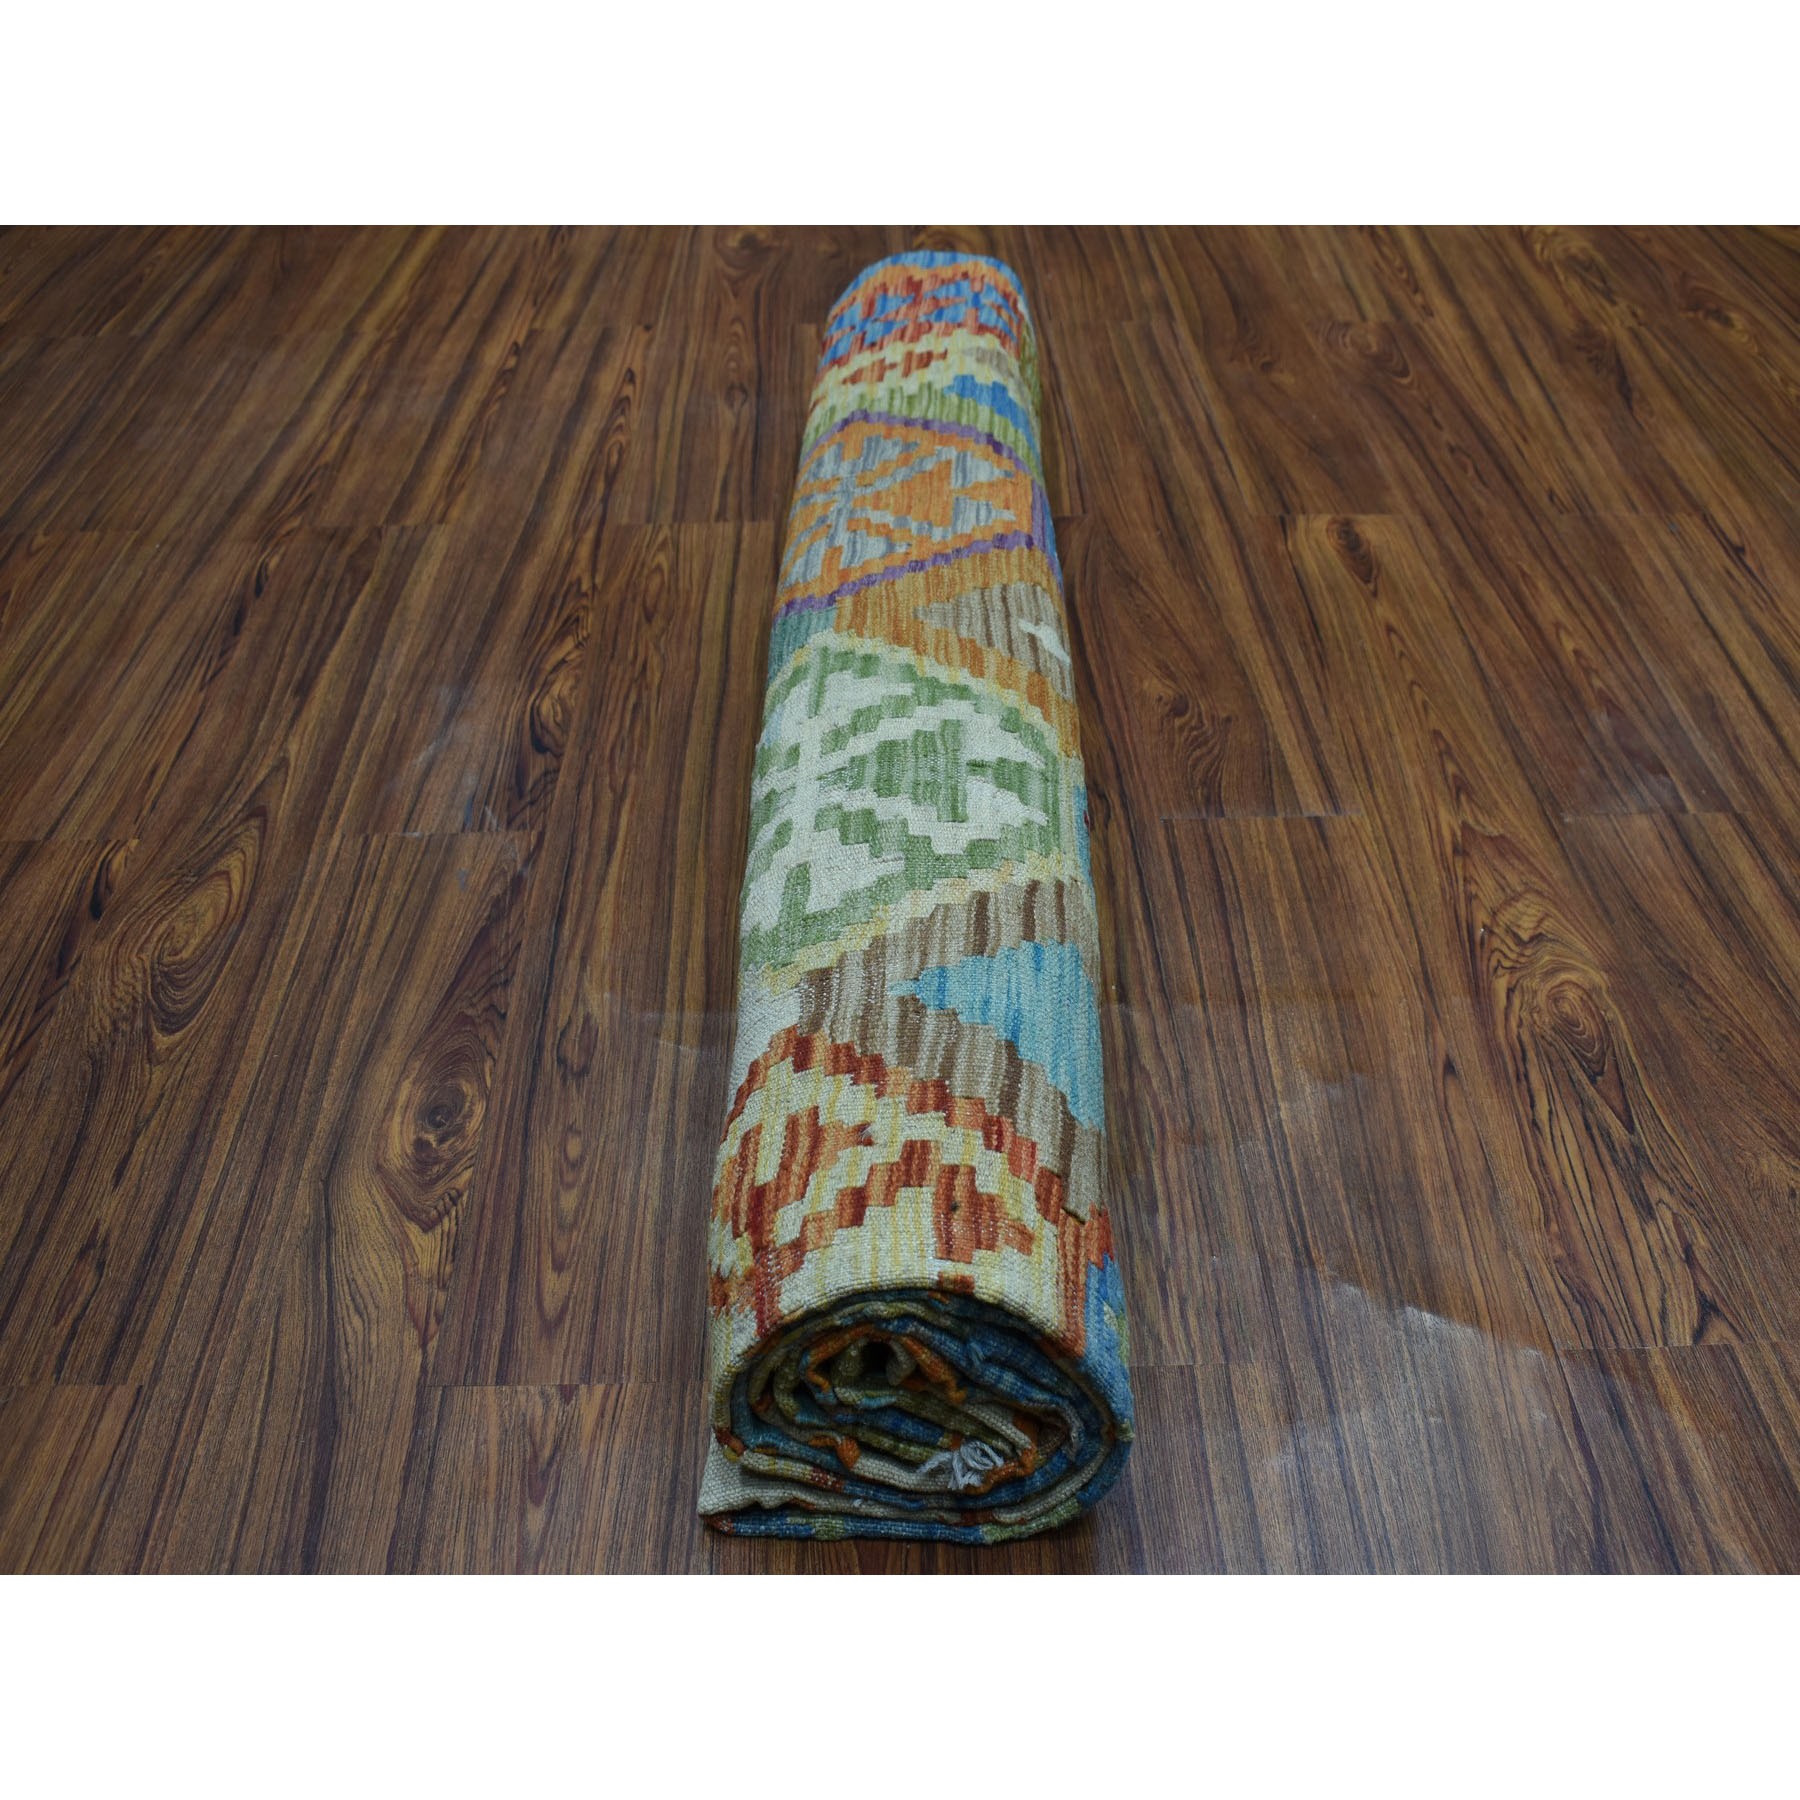 8-2 x9-6  Colorful Afghan Kilim Pure Wool Hand Woven Oriental Rug 